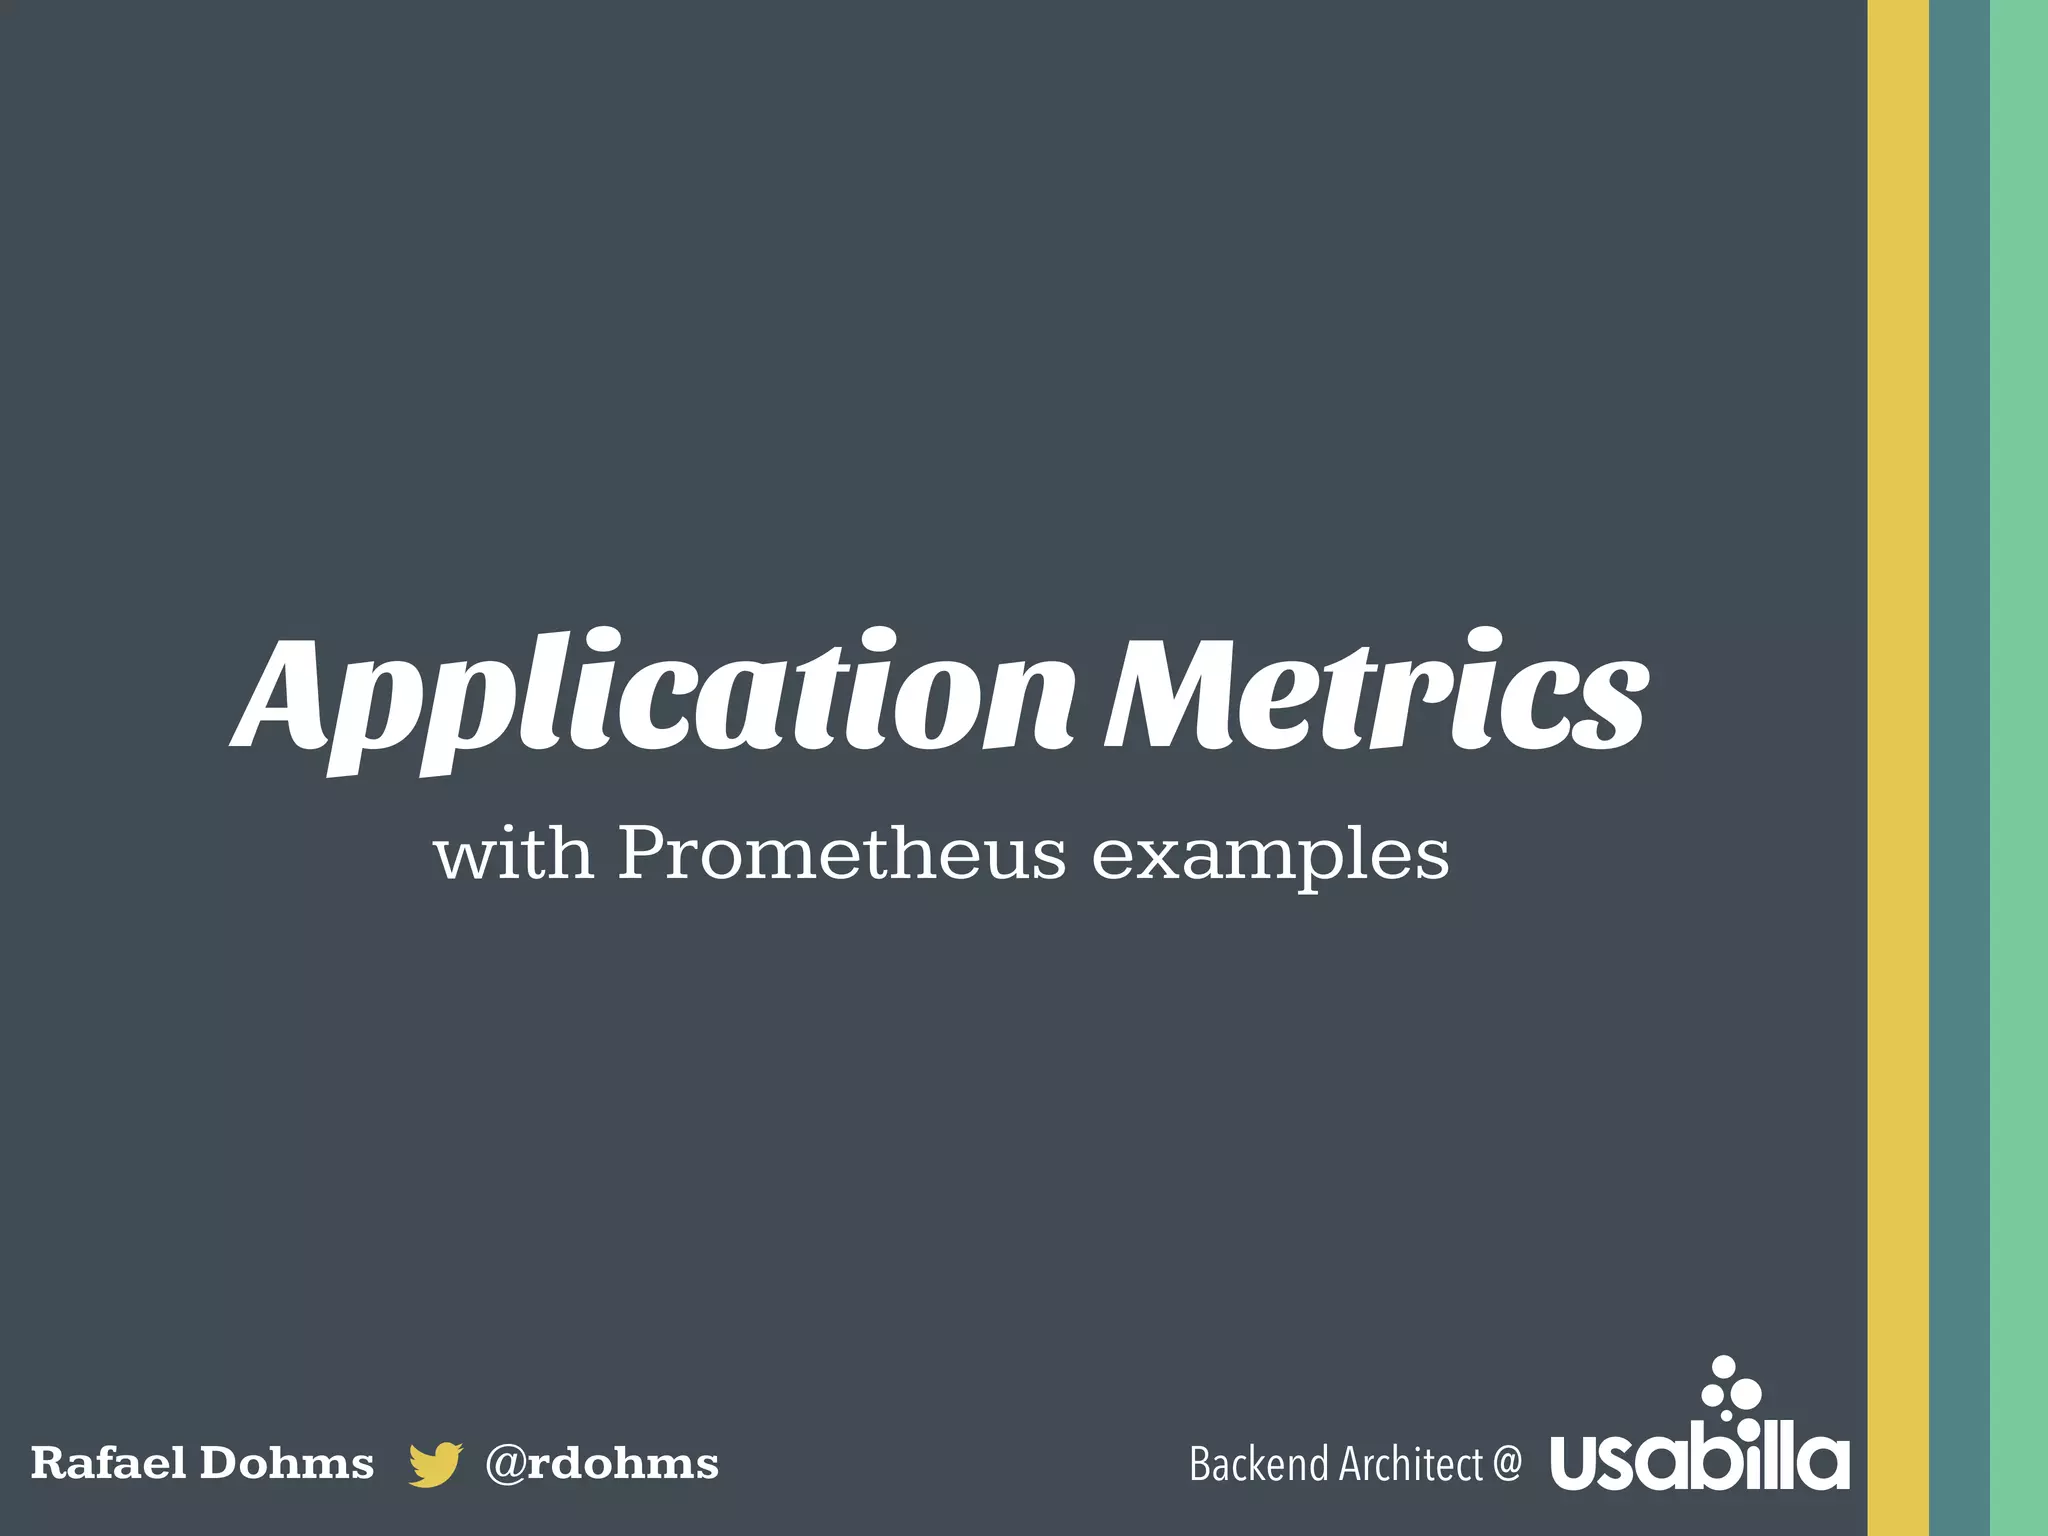 Application metrics